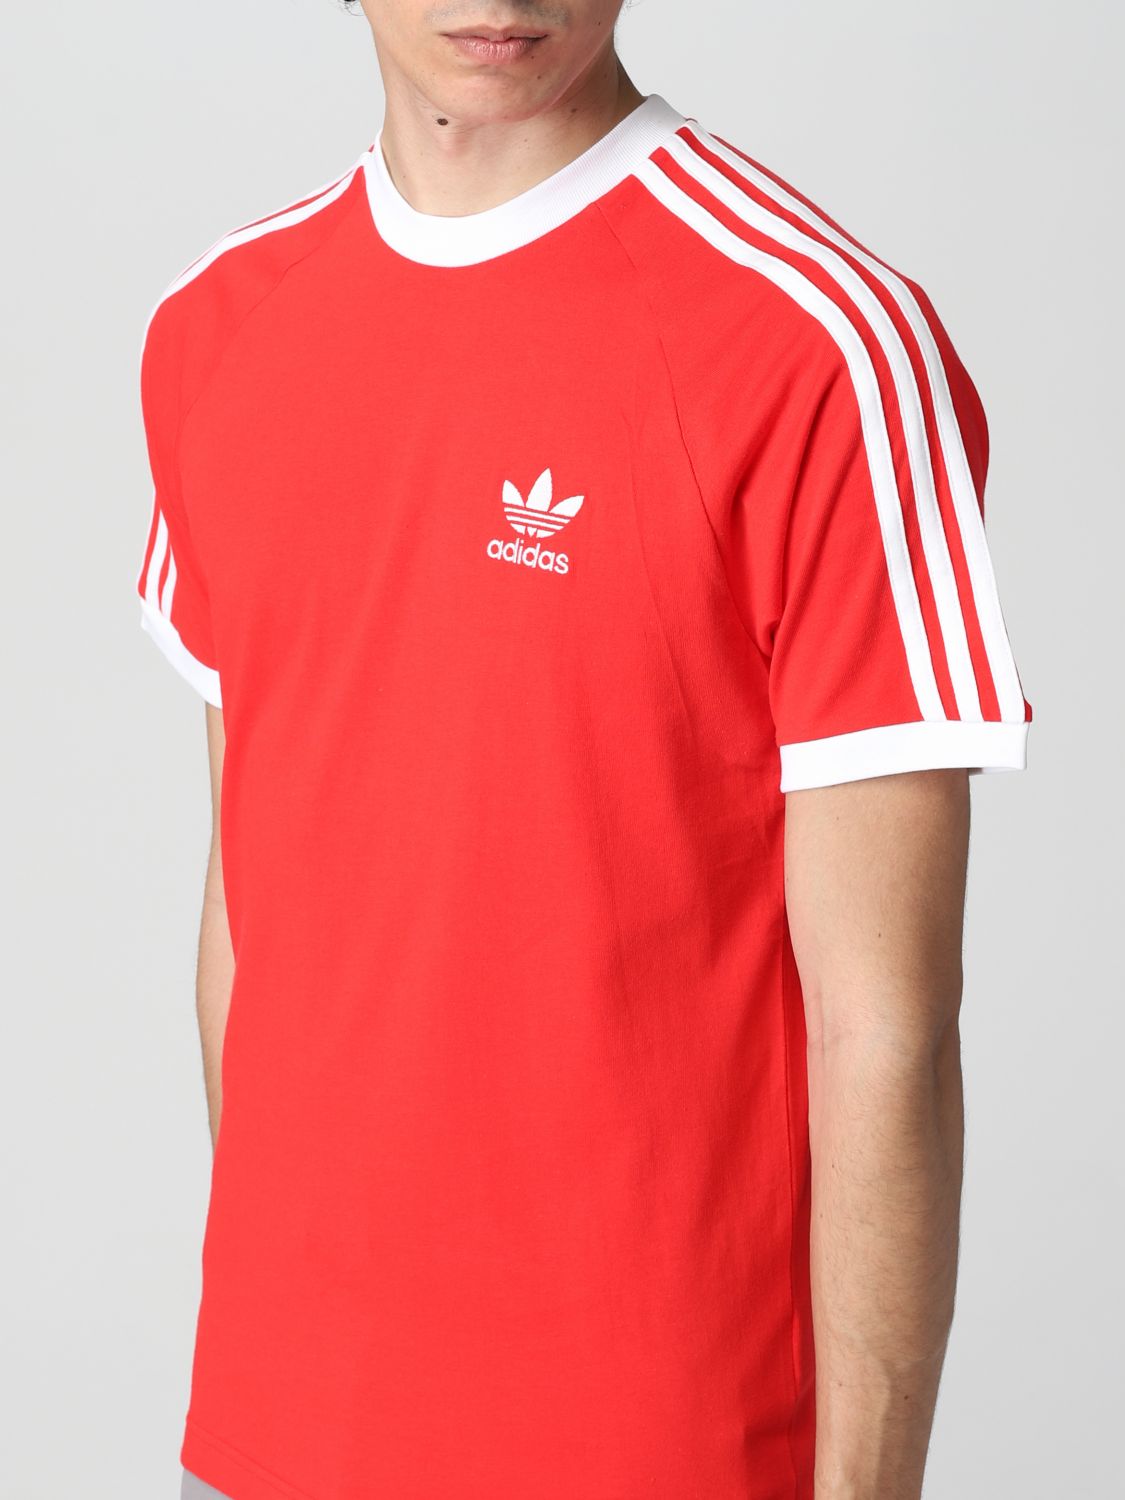 noorden cassette Ontwikkelen ADIDAS ORIGINALS: T-shirt with logo - Red | Adidas Originals t-shirt HE9547  online on GIGLIO.COM